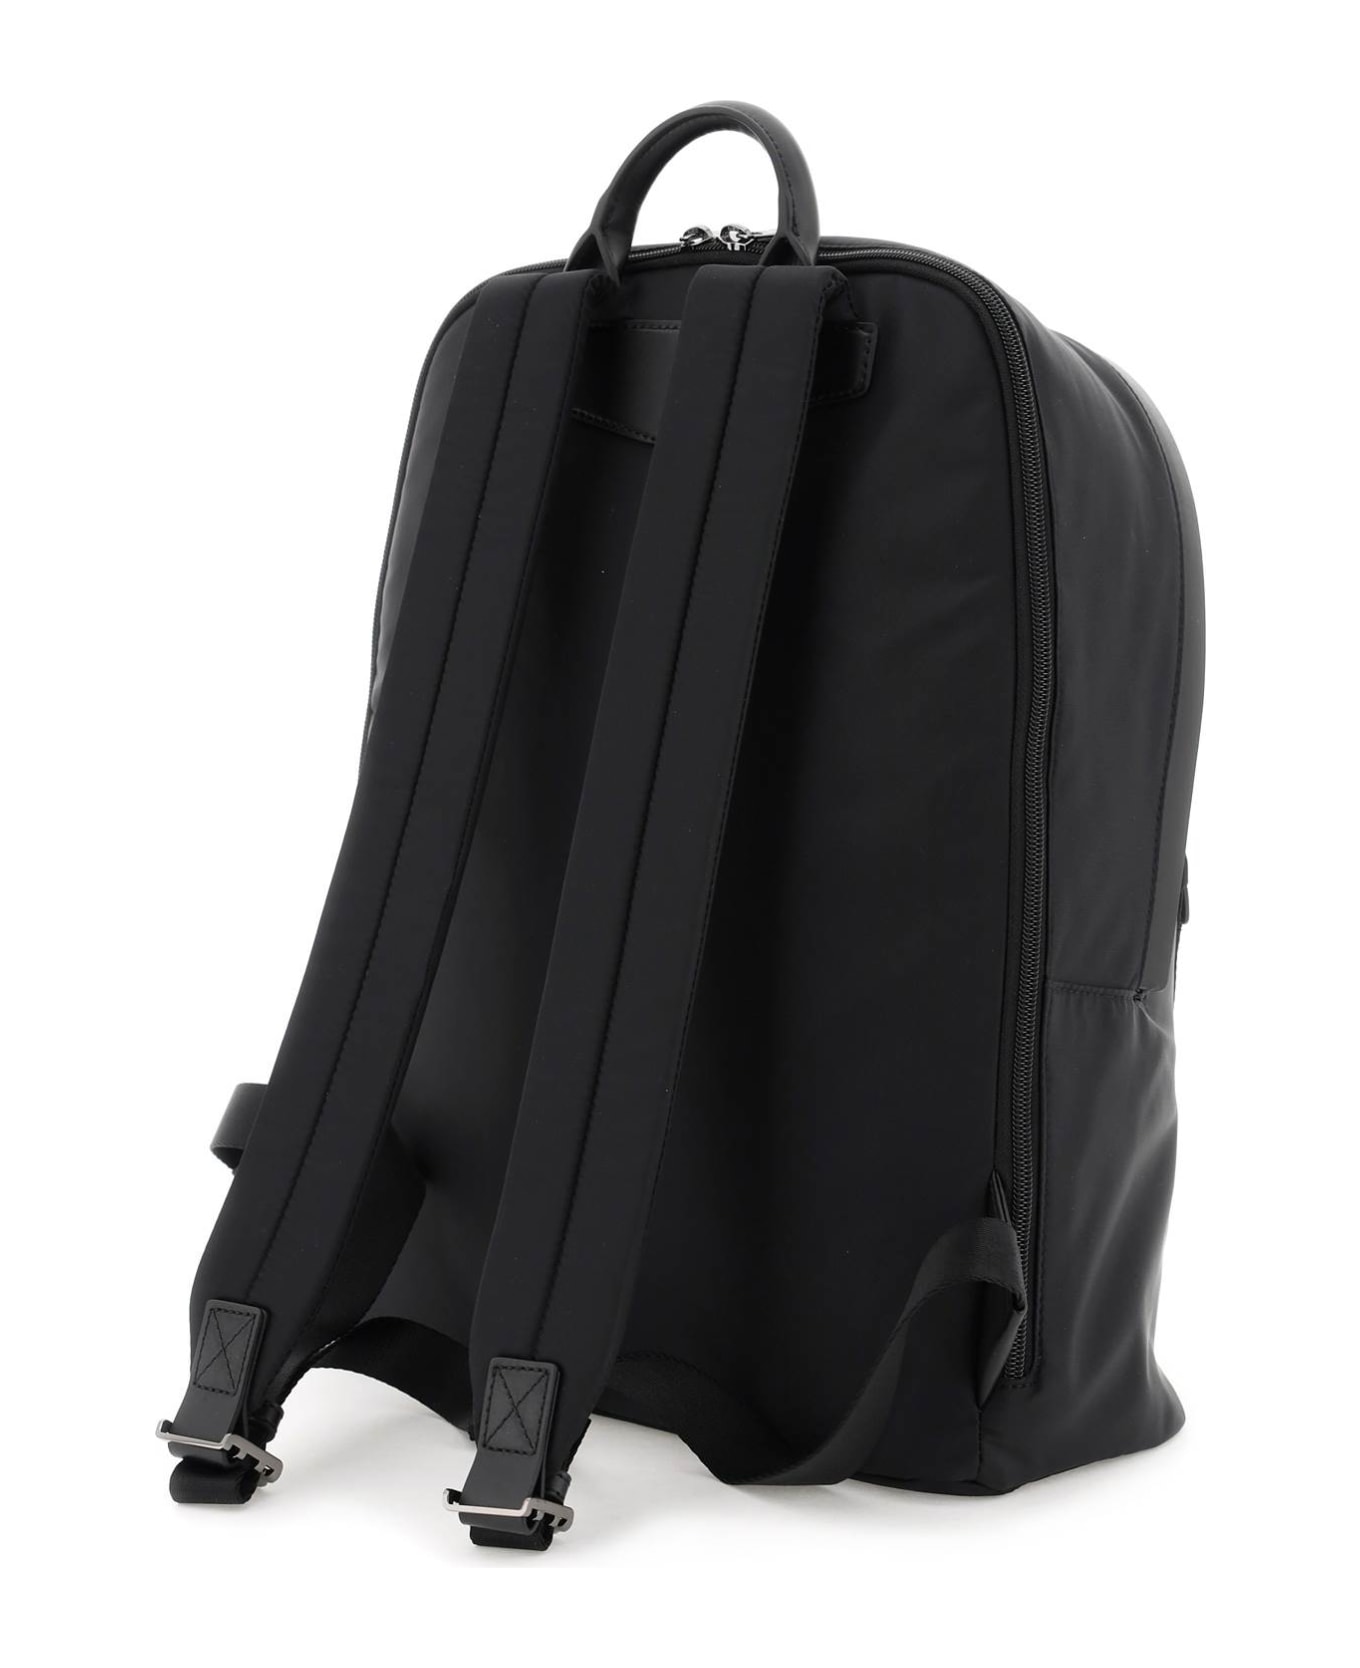 Emporio Armani Black Nylon Backpack - NERO (Black)